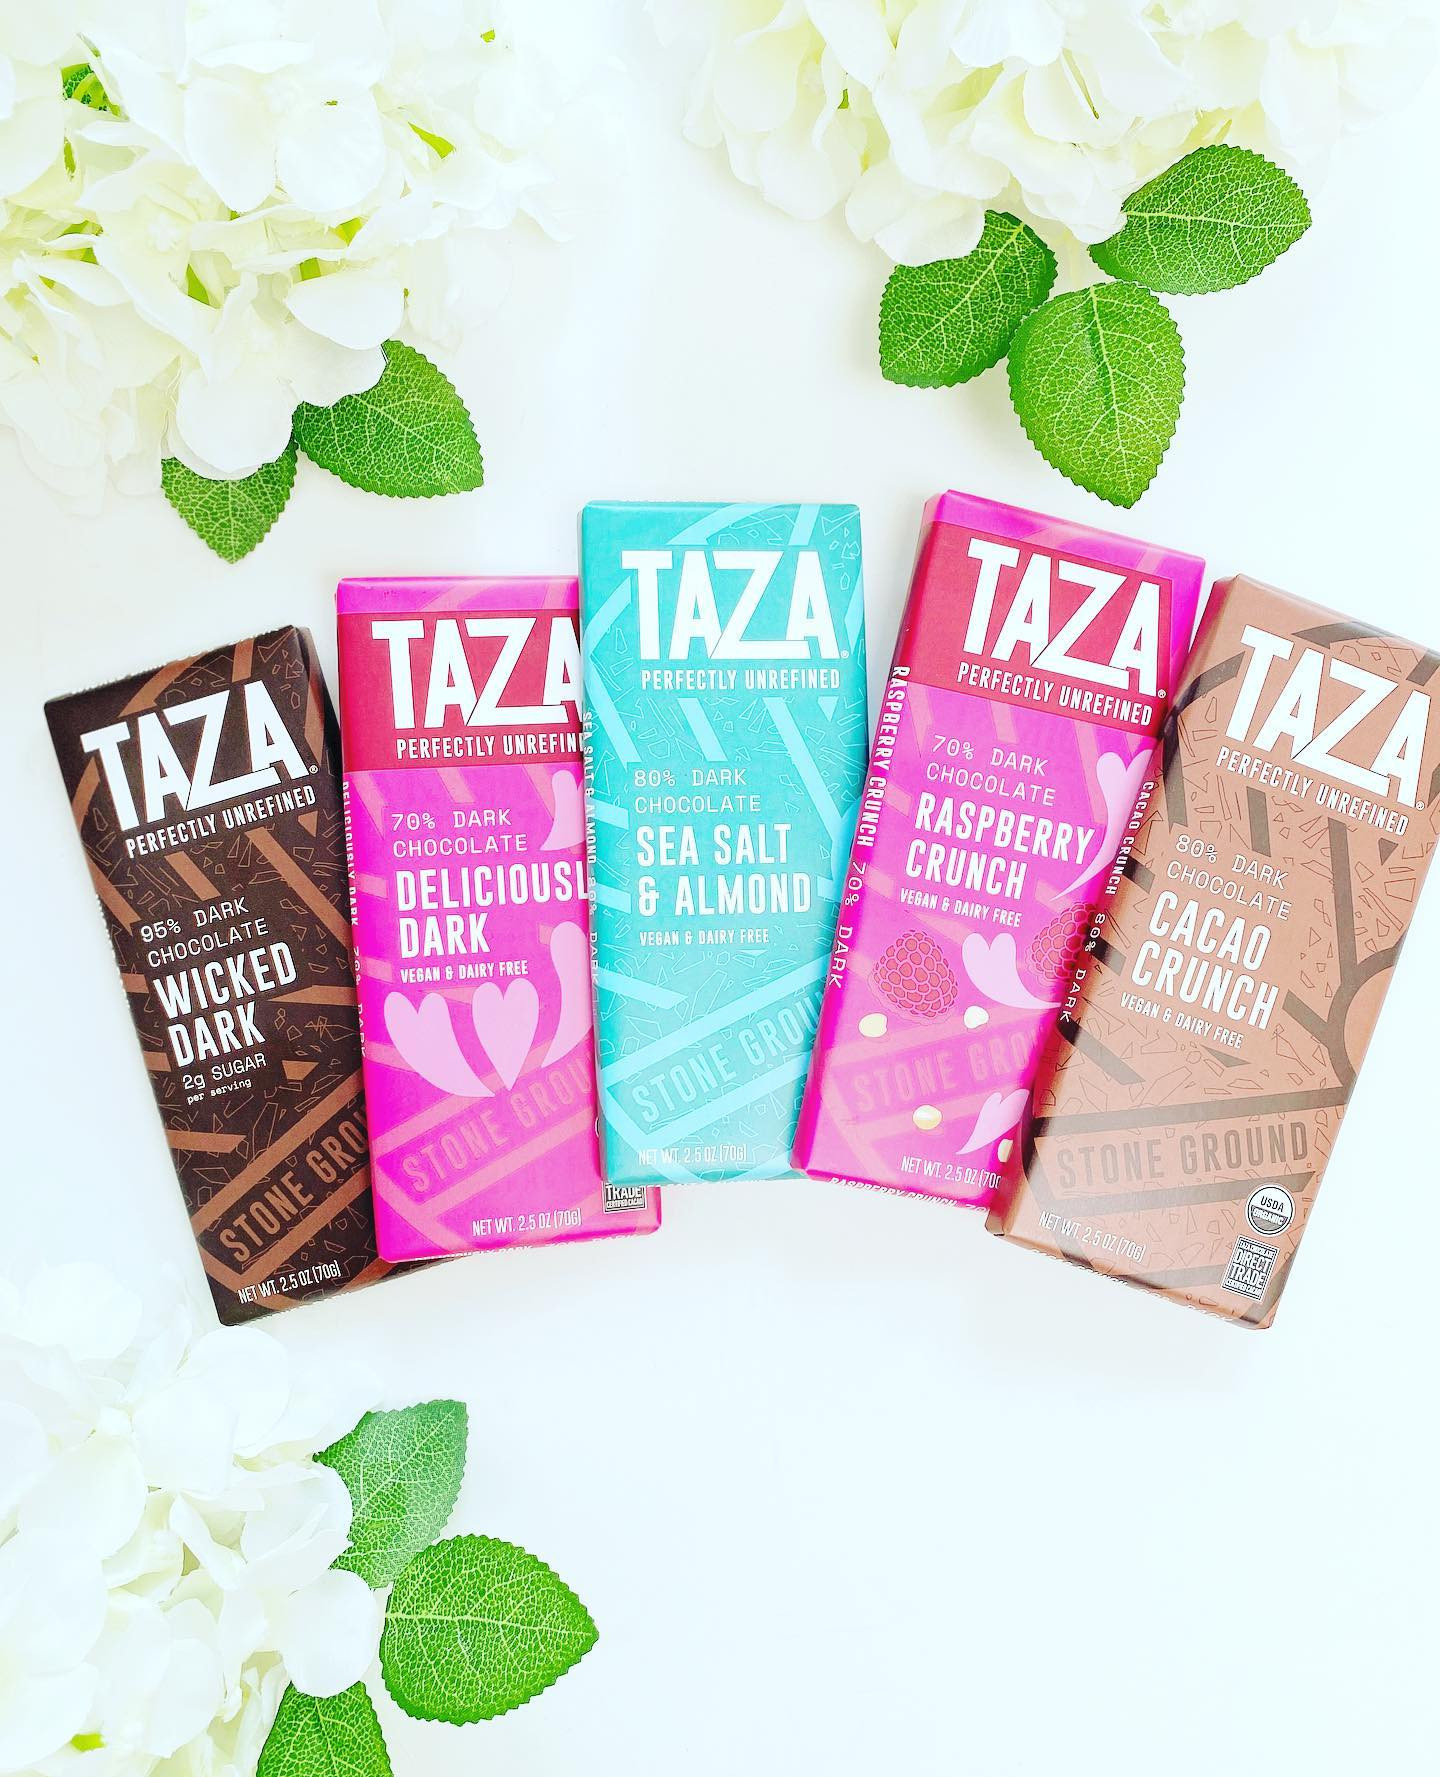 Taza Organic chocolate review